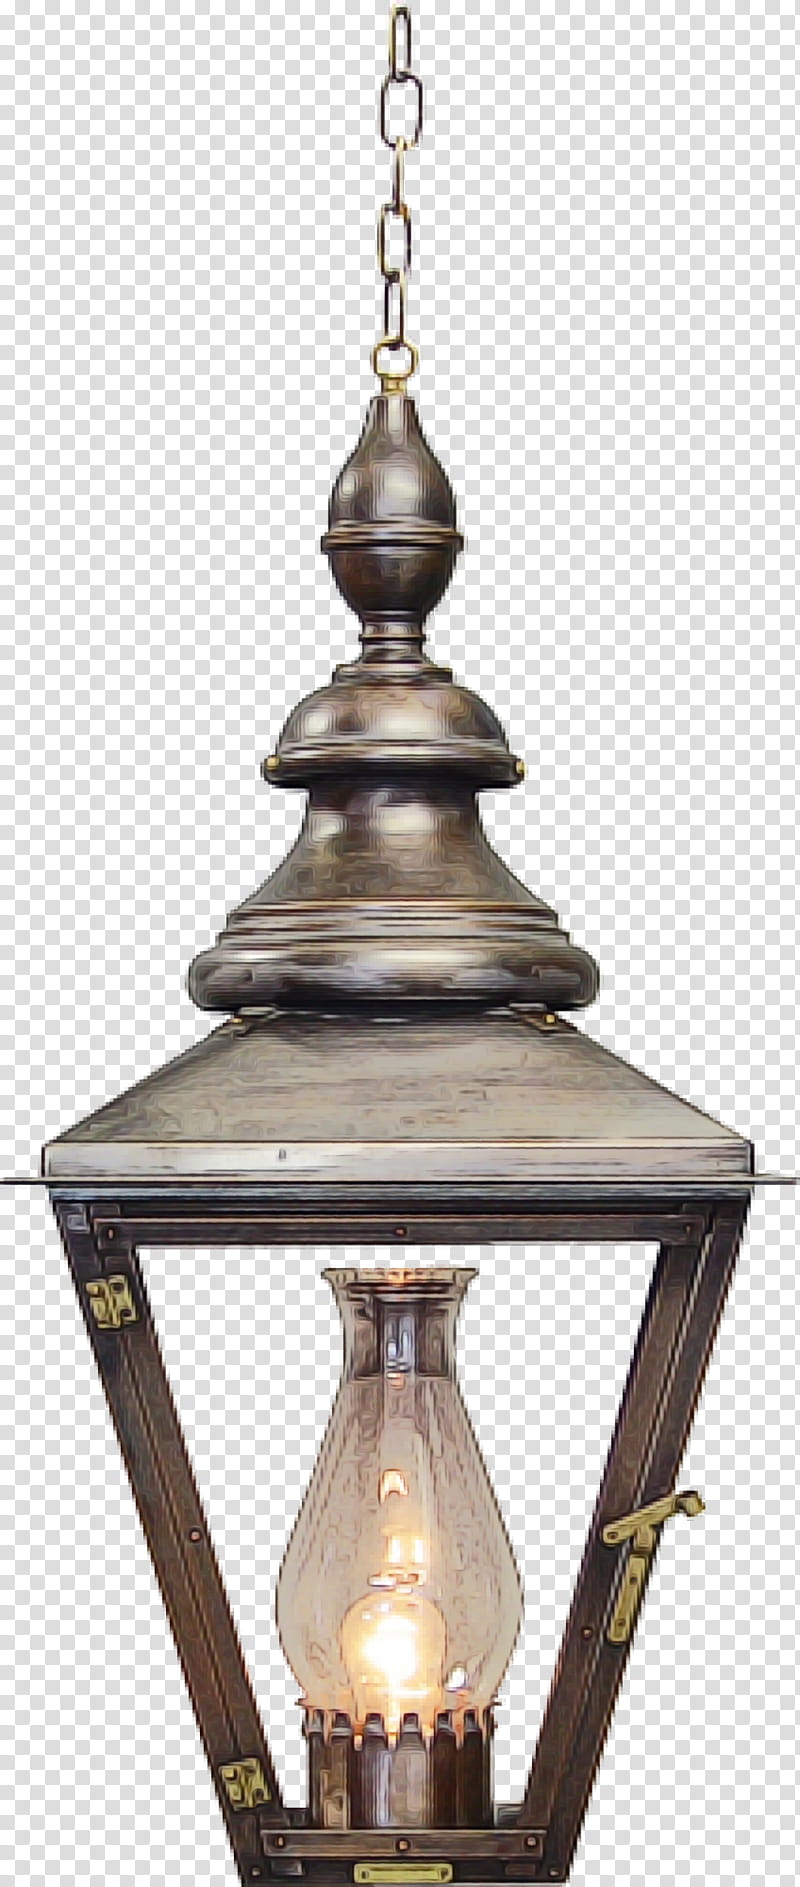 brass lighting finial light fixture metal, Watercolor, Paint, Wet Ink, Bronze, Antique, Lamp, Table transparent background PNG clipart